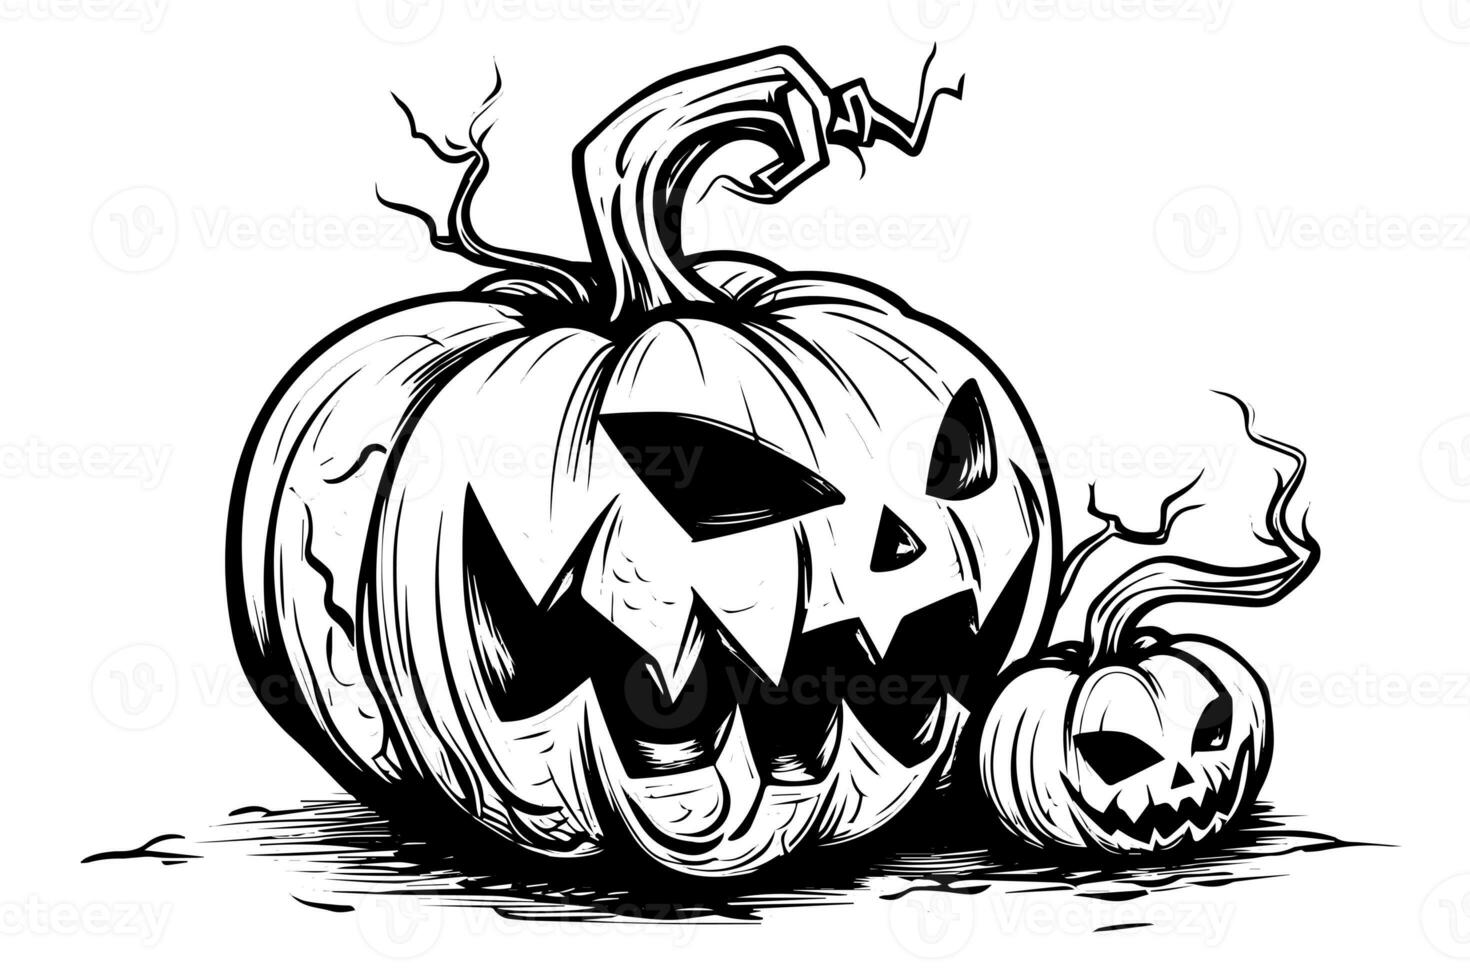 Halloween pumpkin head mascot engraving ink sketch hand drawn vector illustration. photo